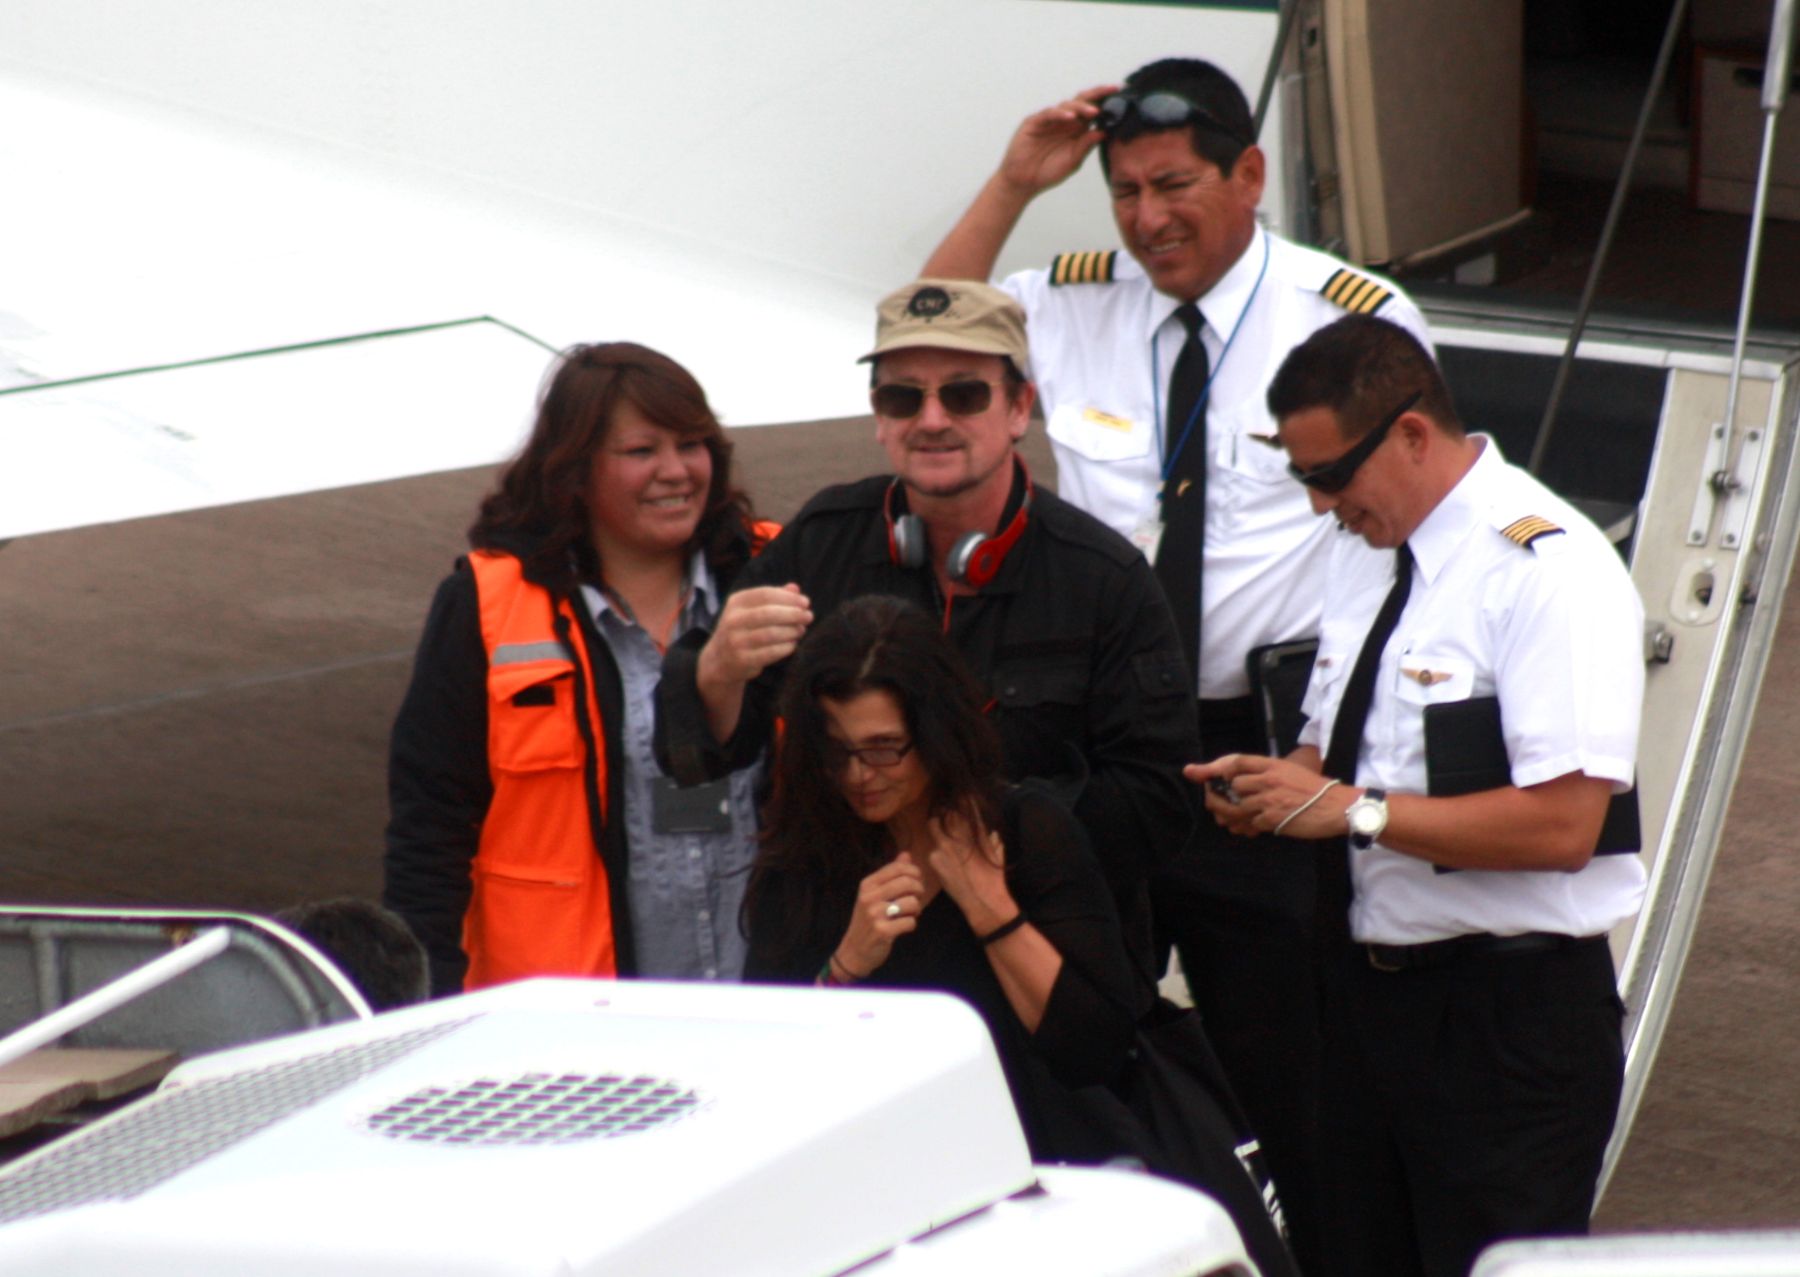 The leader of the legendary Irish band U2, Bono Vox, arrives in Cusco.